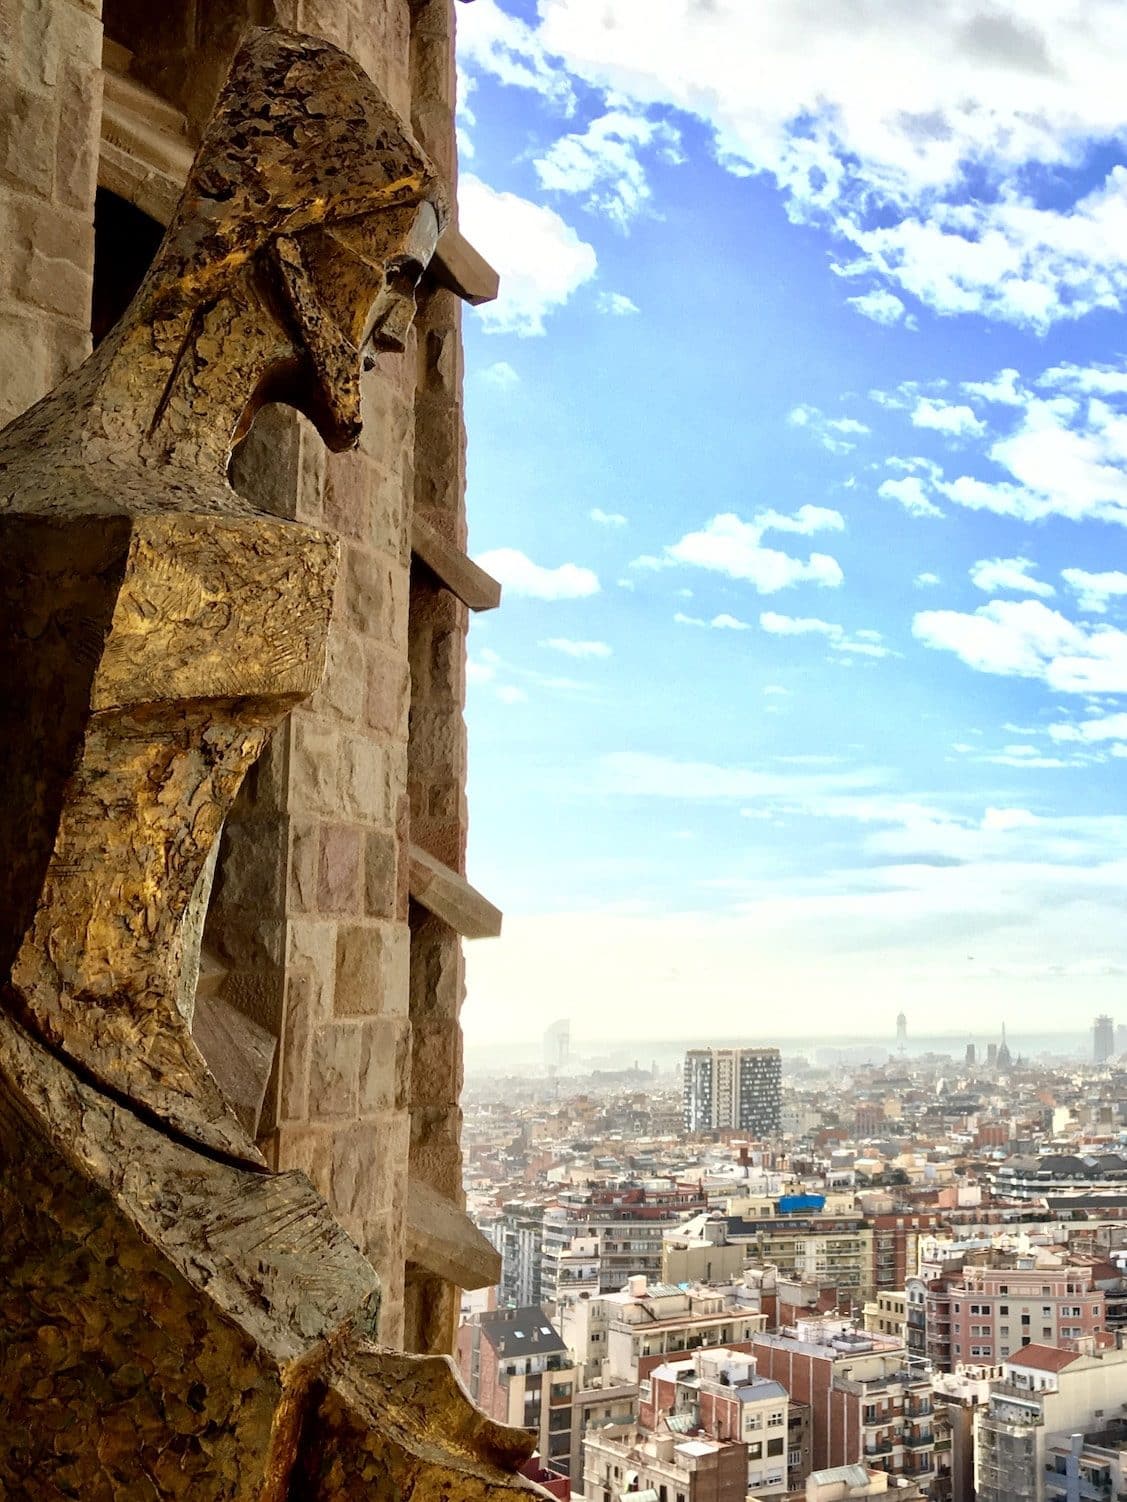 Views from the Sagrada Familia Temple in Barcelona